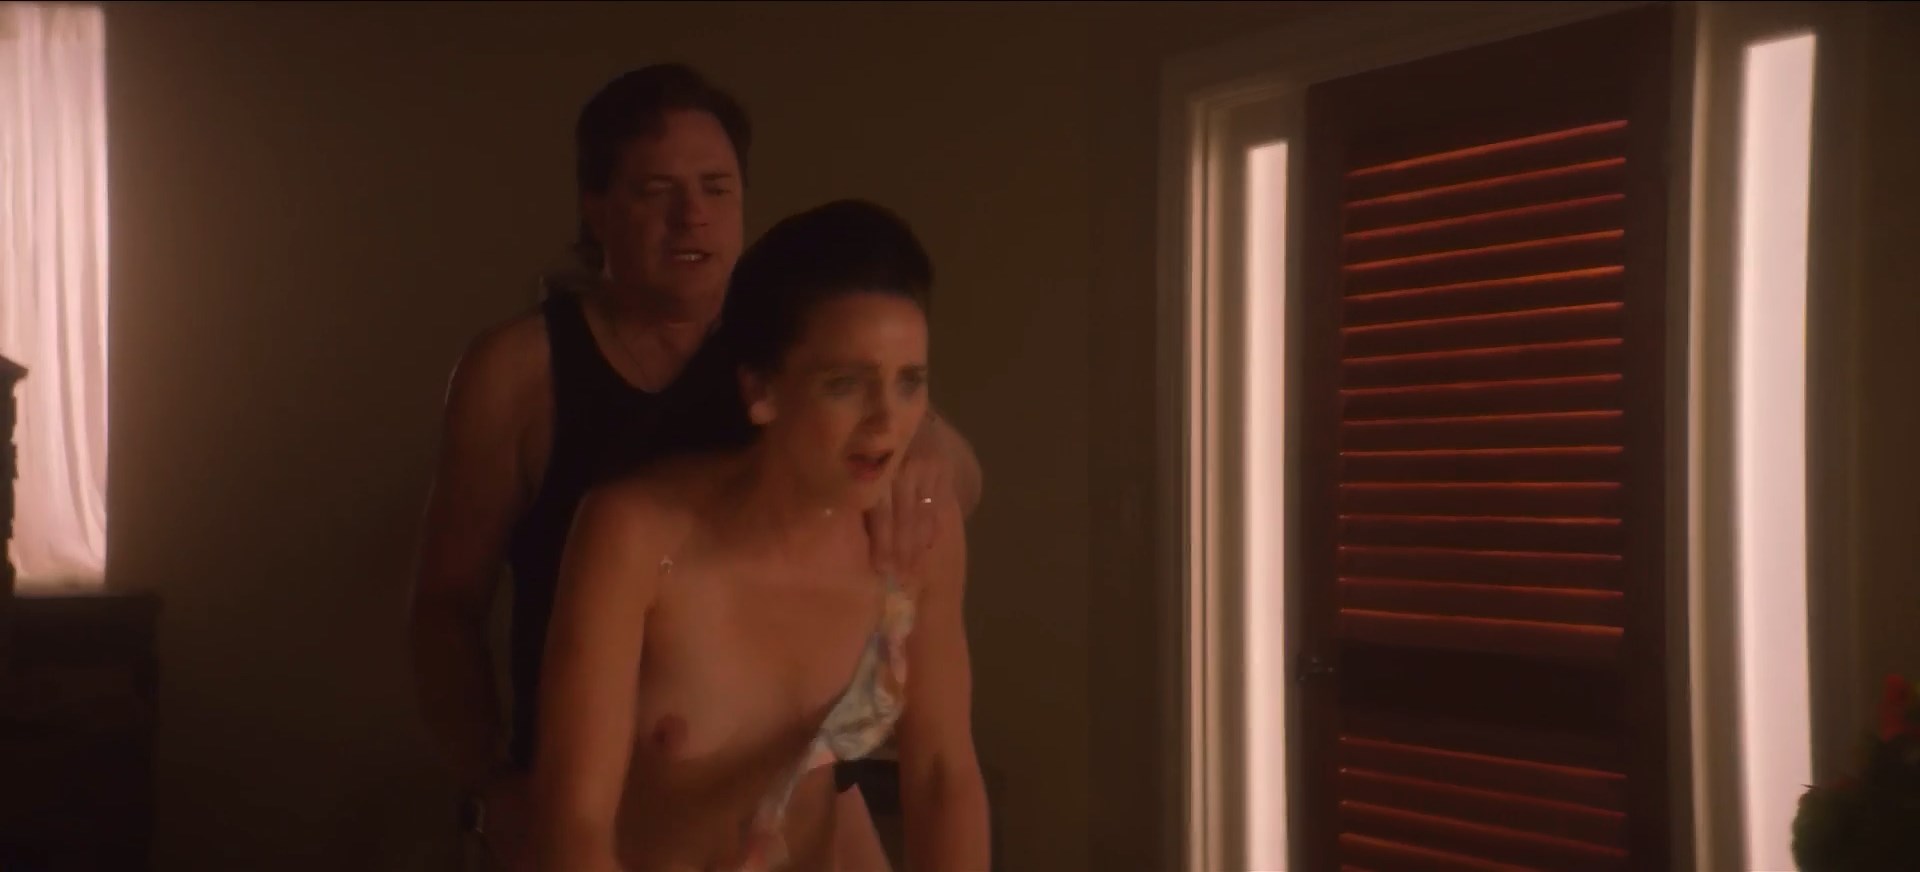 Nude Video Celebs Ashley Dougherty Nude Doom Patrol S01e01 2019